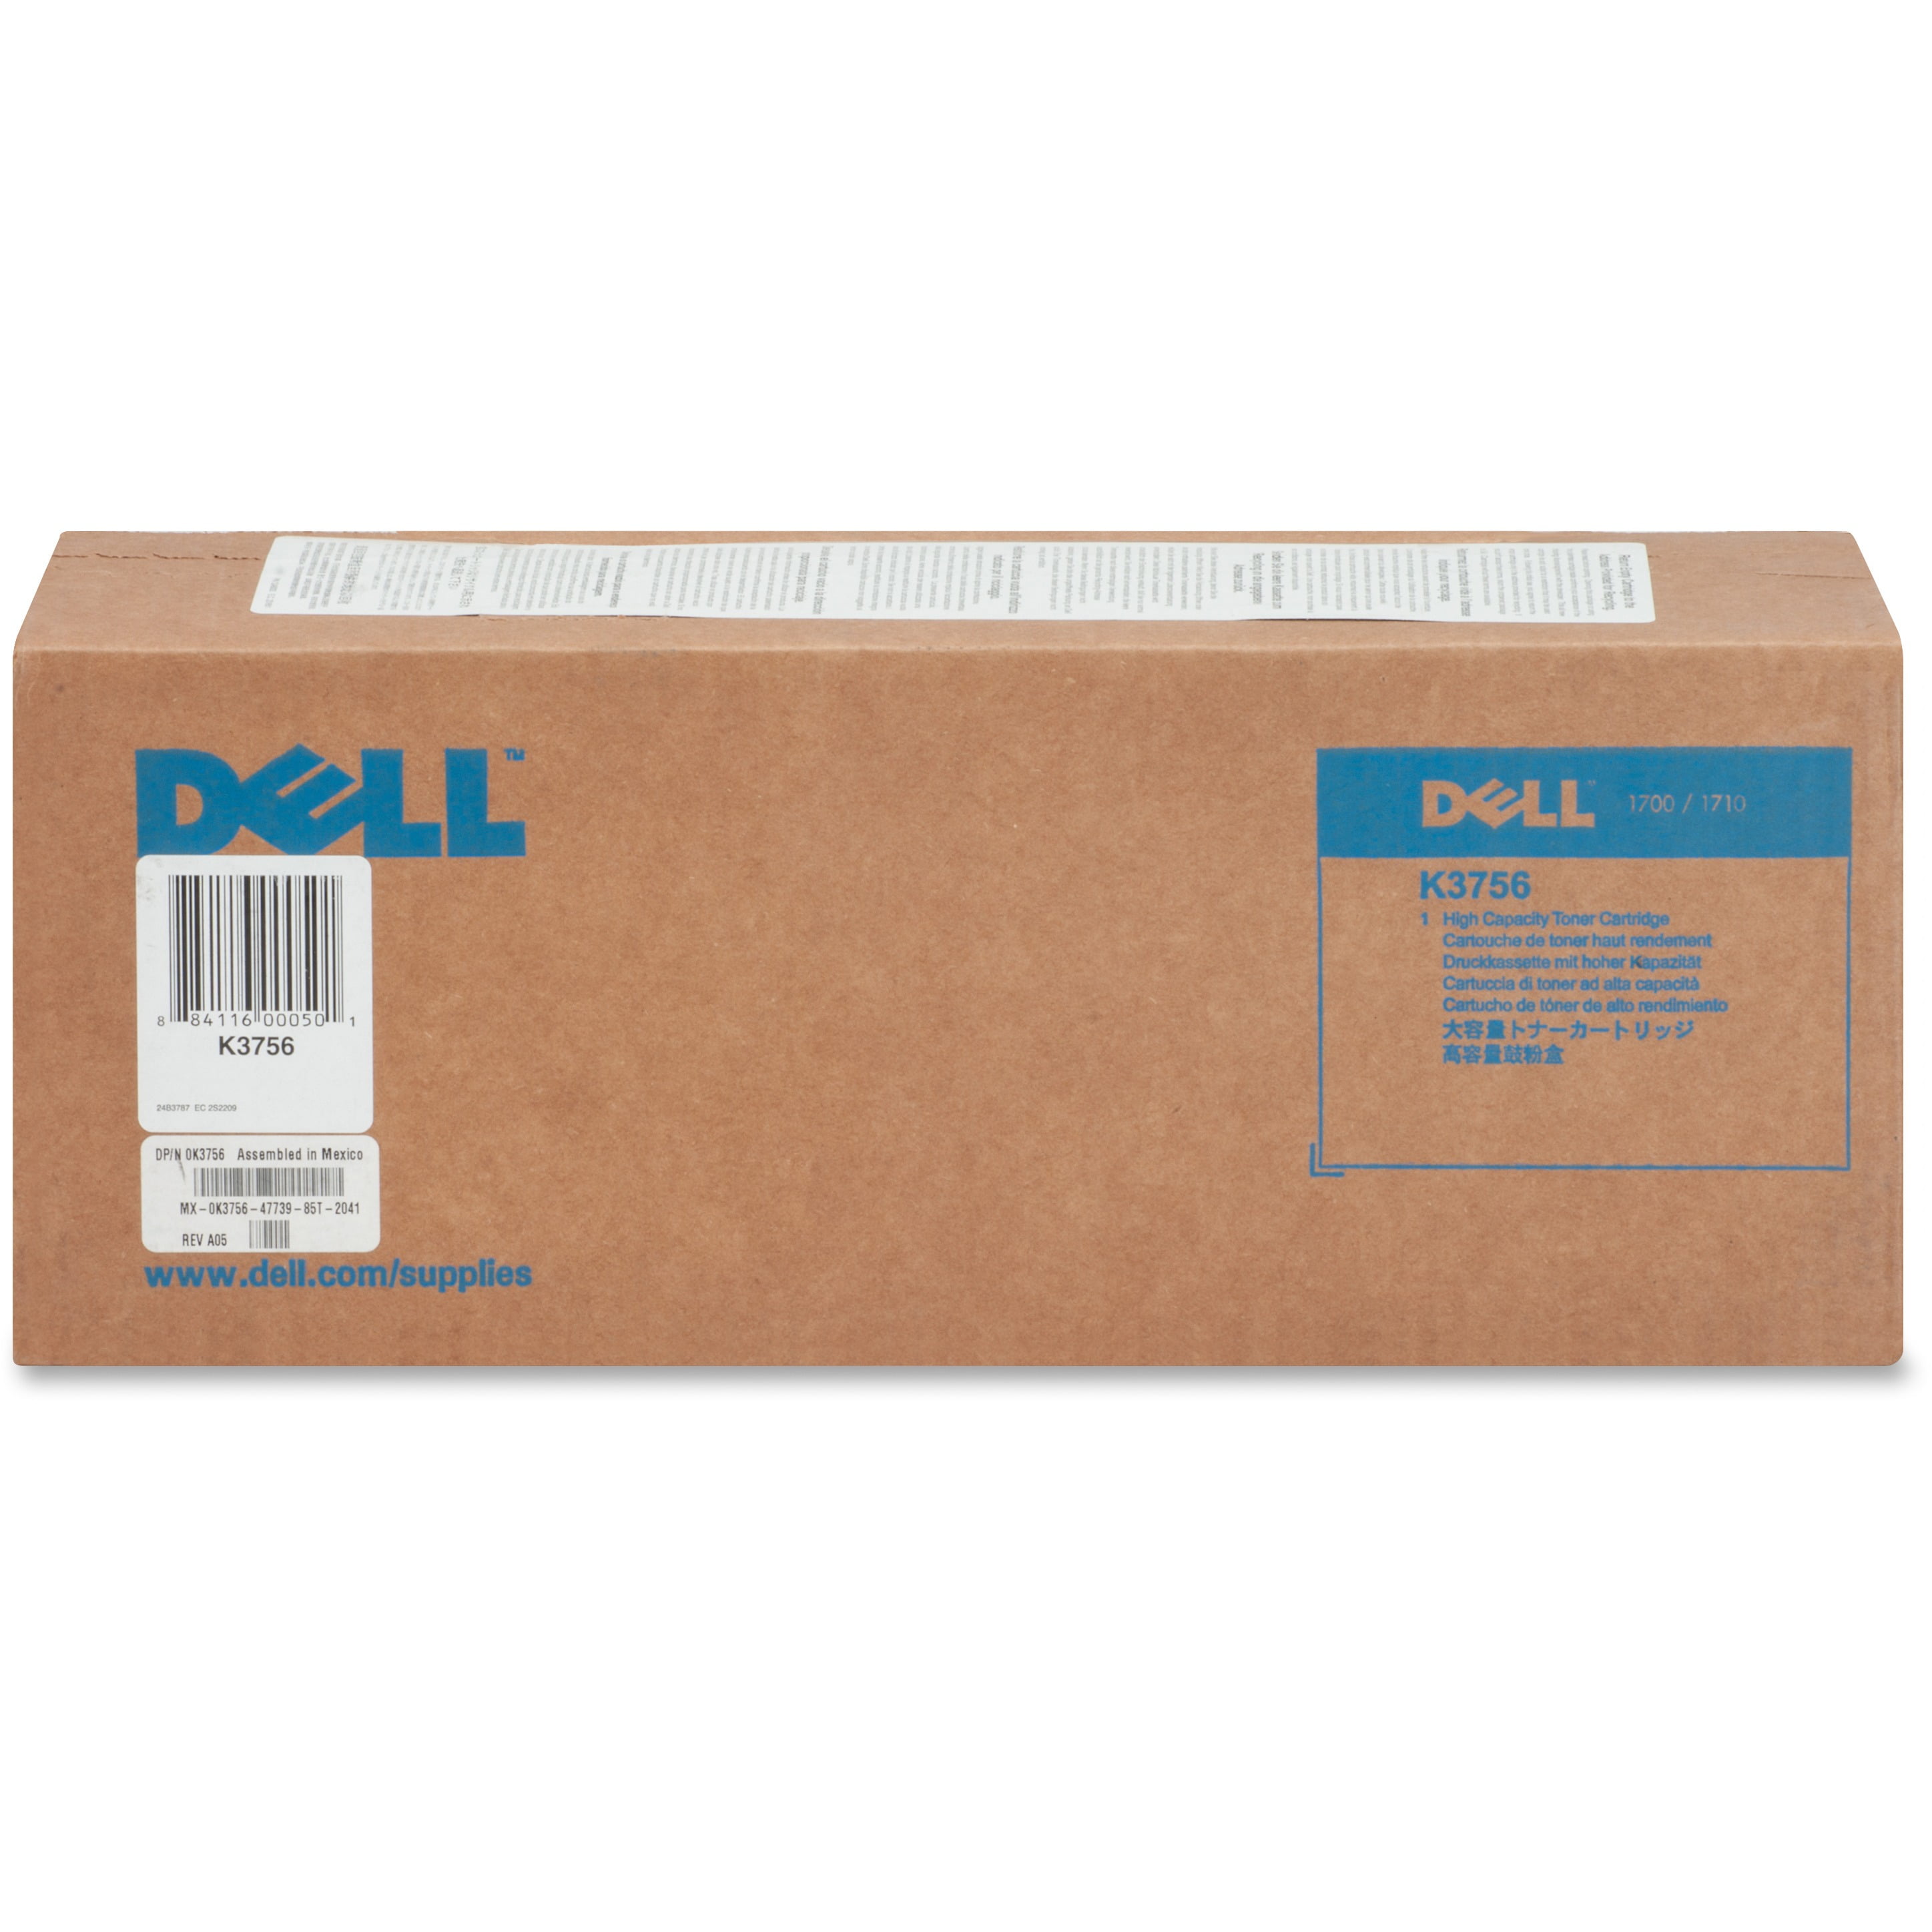 sorti düştü Gerçekten mi  Dell, DLLK3756, 1700/1710 High-yield Toner Cartridge, 1 / Each - Walmart.com